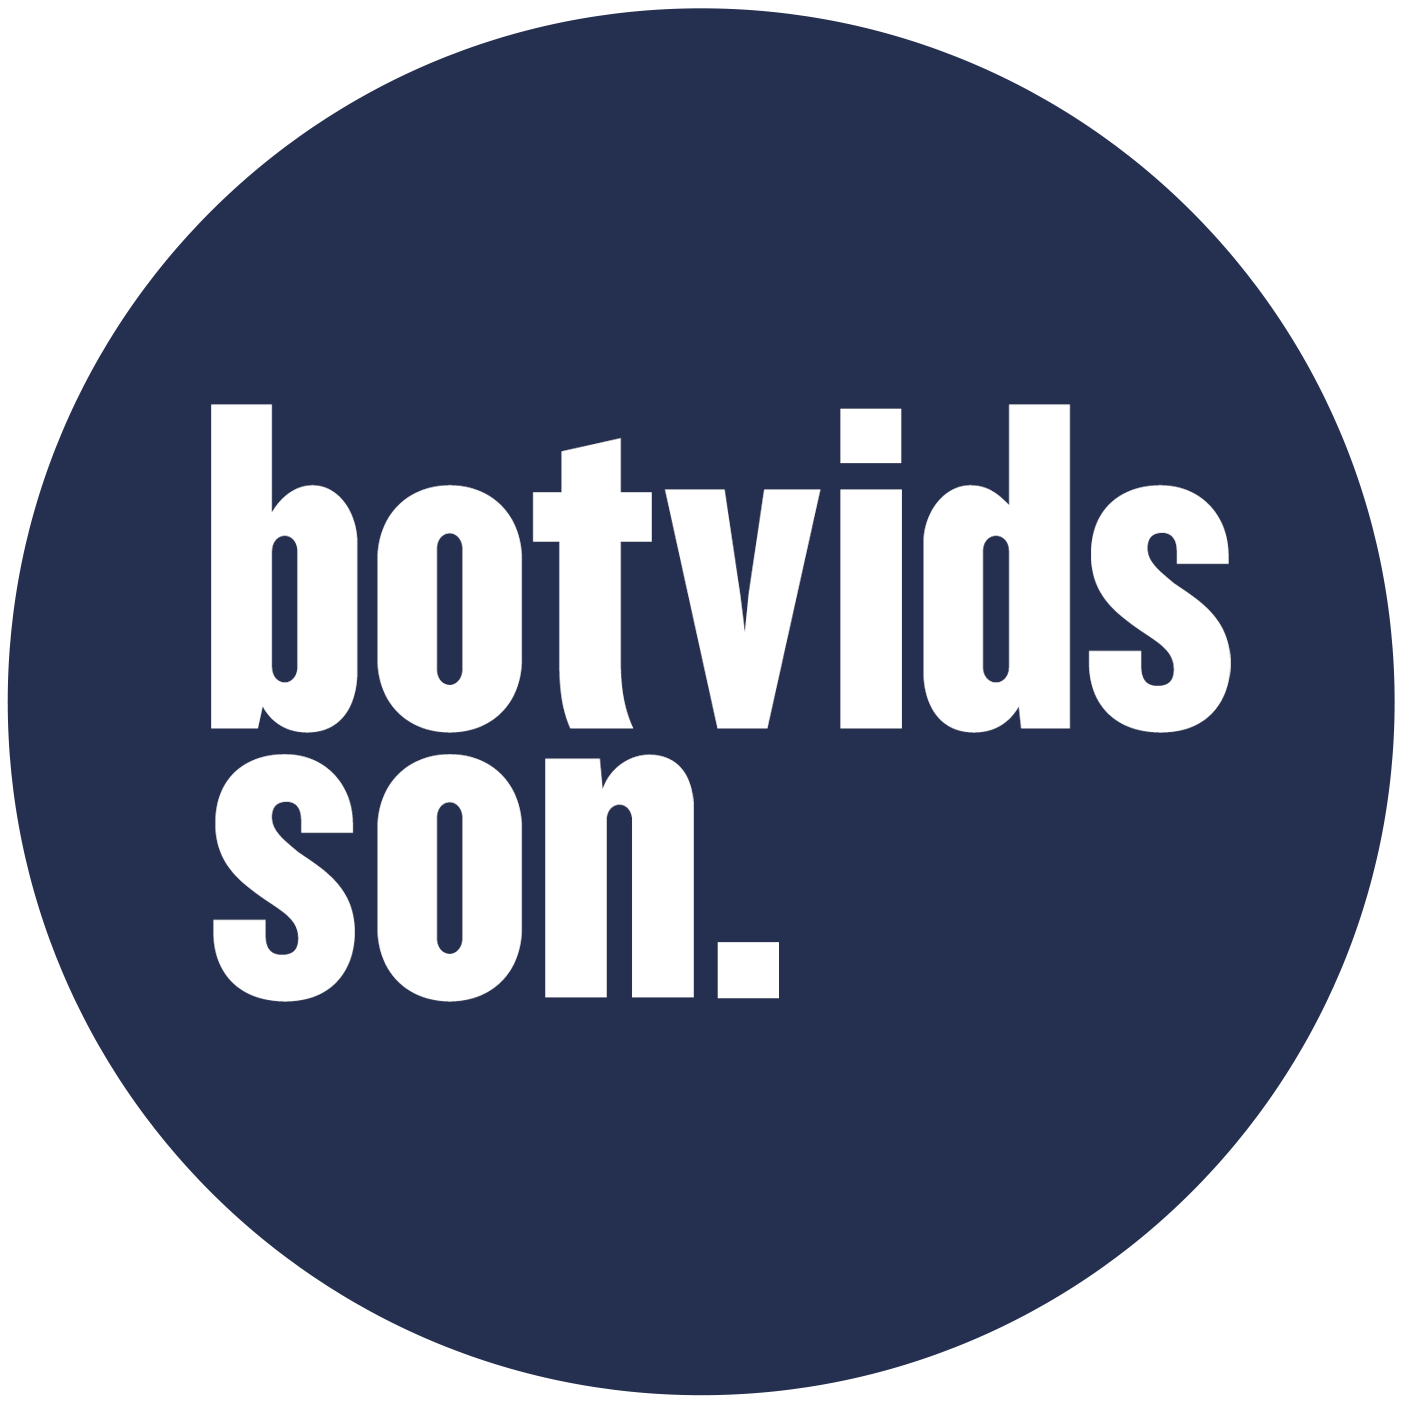 (c) Botvidsson.se